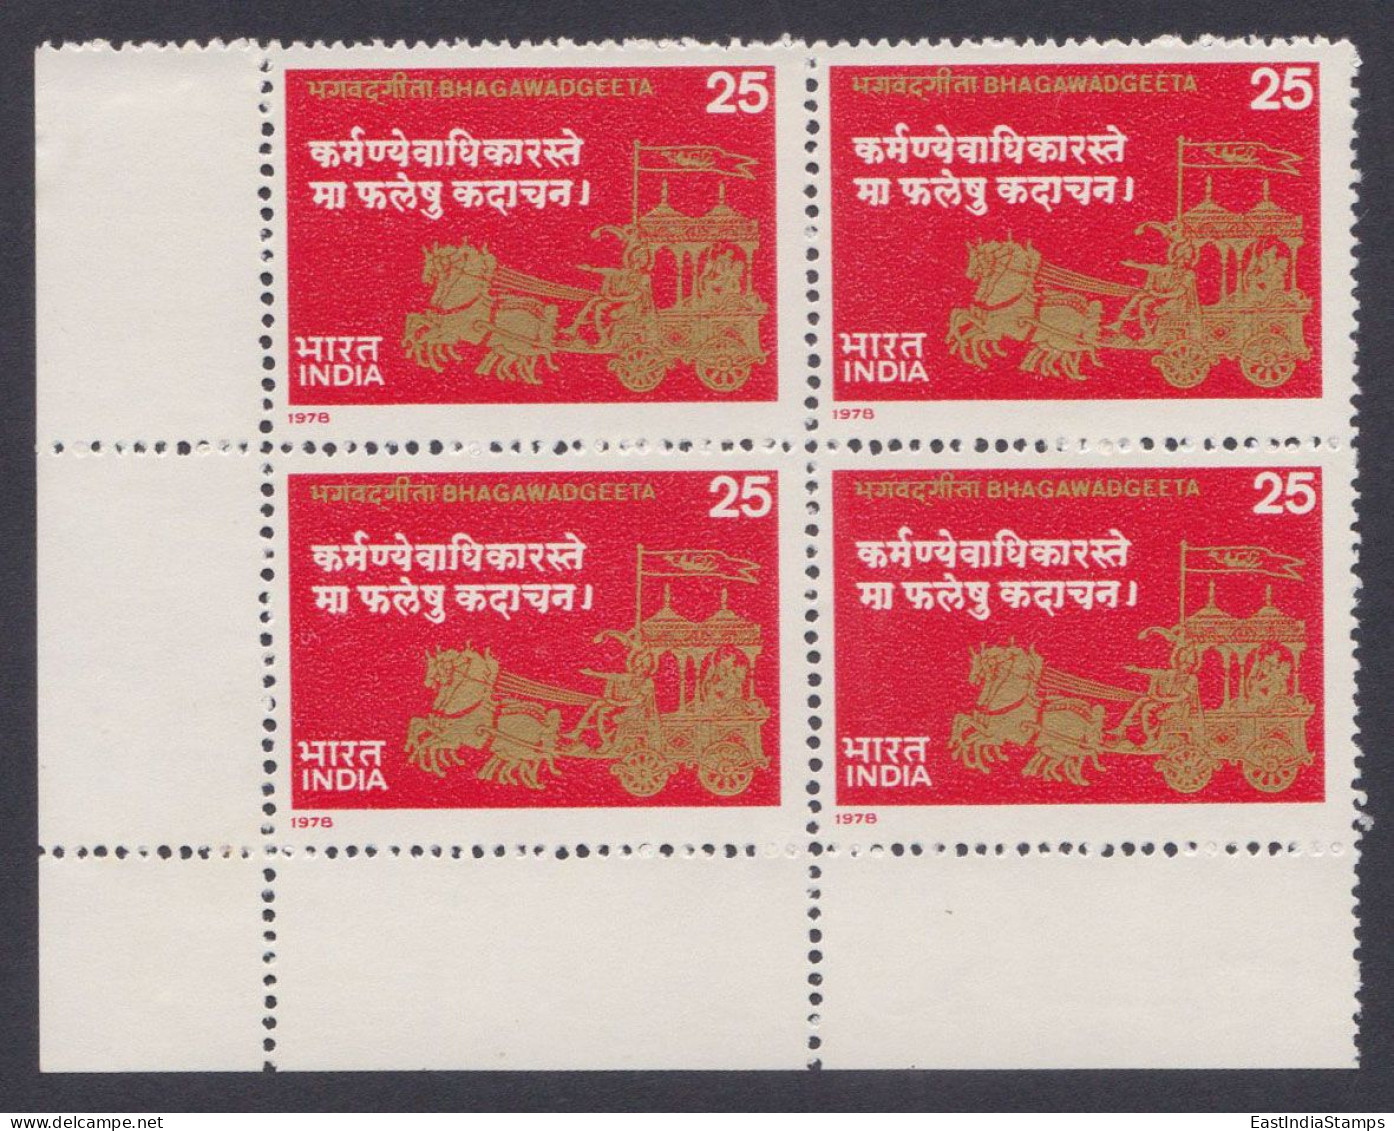 Inde India 1978 MNH Bhagawad Geeta, Gita, Literature, Hindu Scripture, Hinduism, Mythology, Myth, Horse, Horses, Block - Unused Stamps